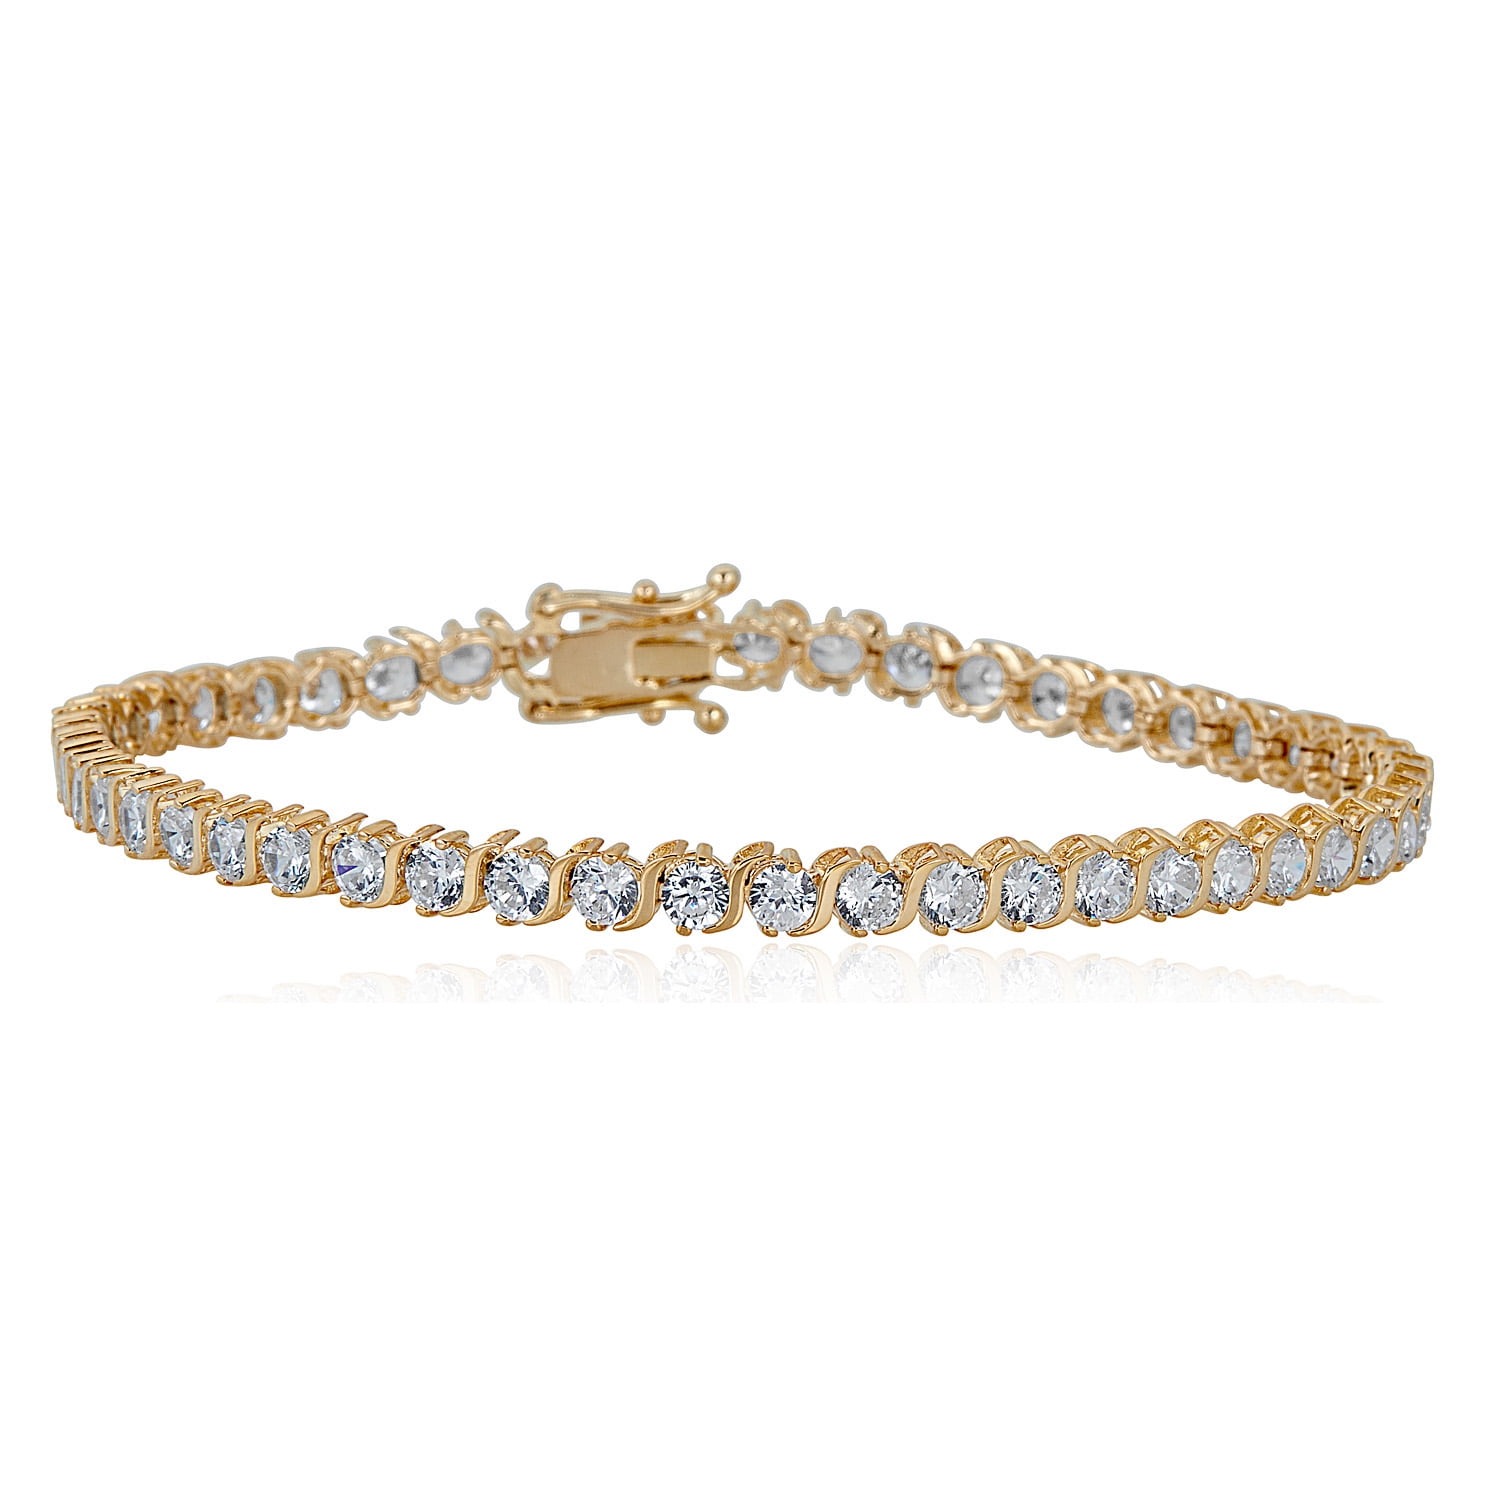 Cubic Zirconia CZ Diamond Classic Adjustable Slider Bracelet Fashion Jewelry Wedding Gift Size 6.5-7.5 Inch Double Fair 2 Pcs Tennis Bracelets for Women 14K Gold Plated AAA